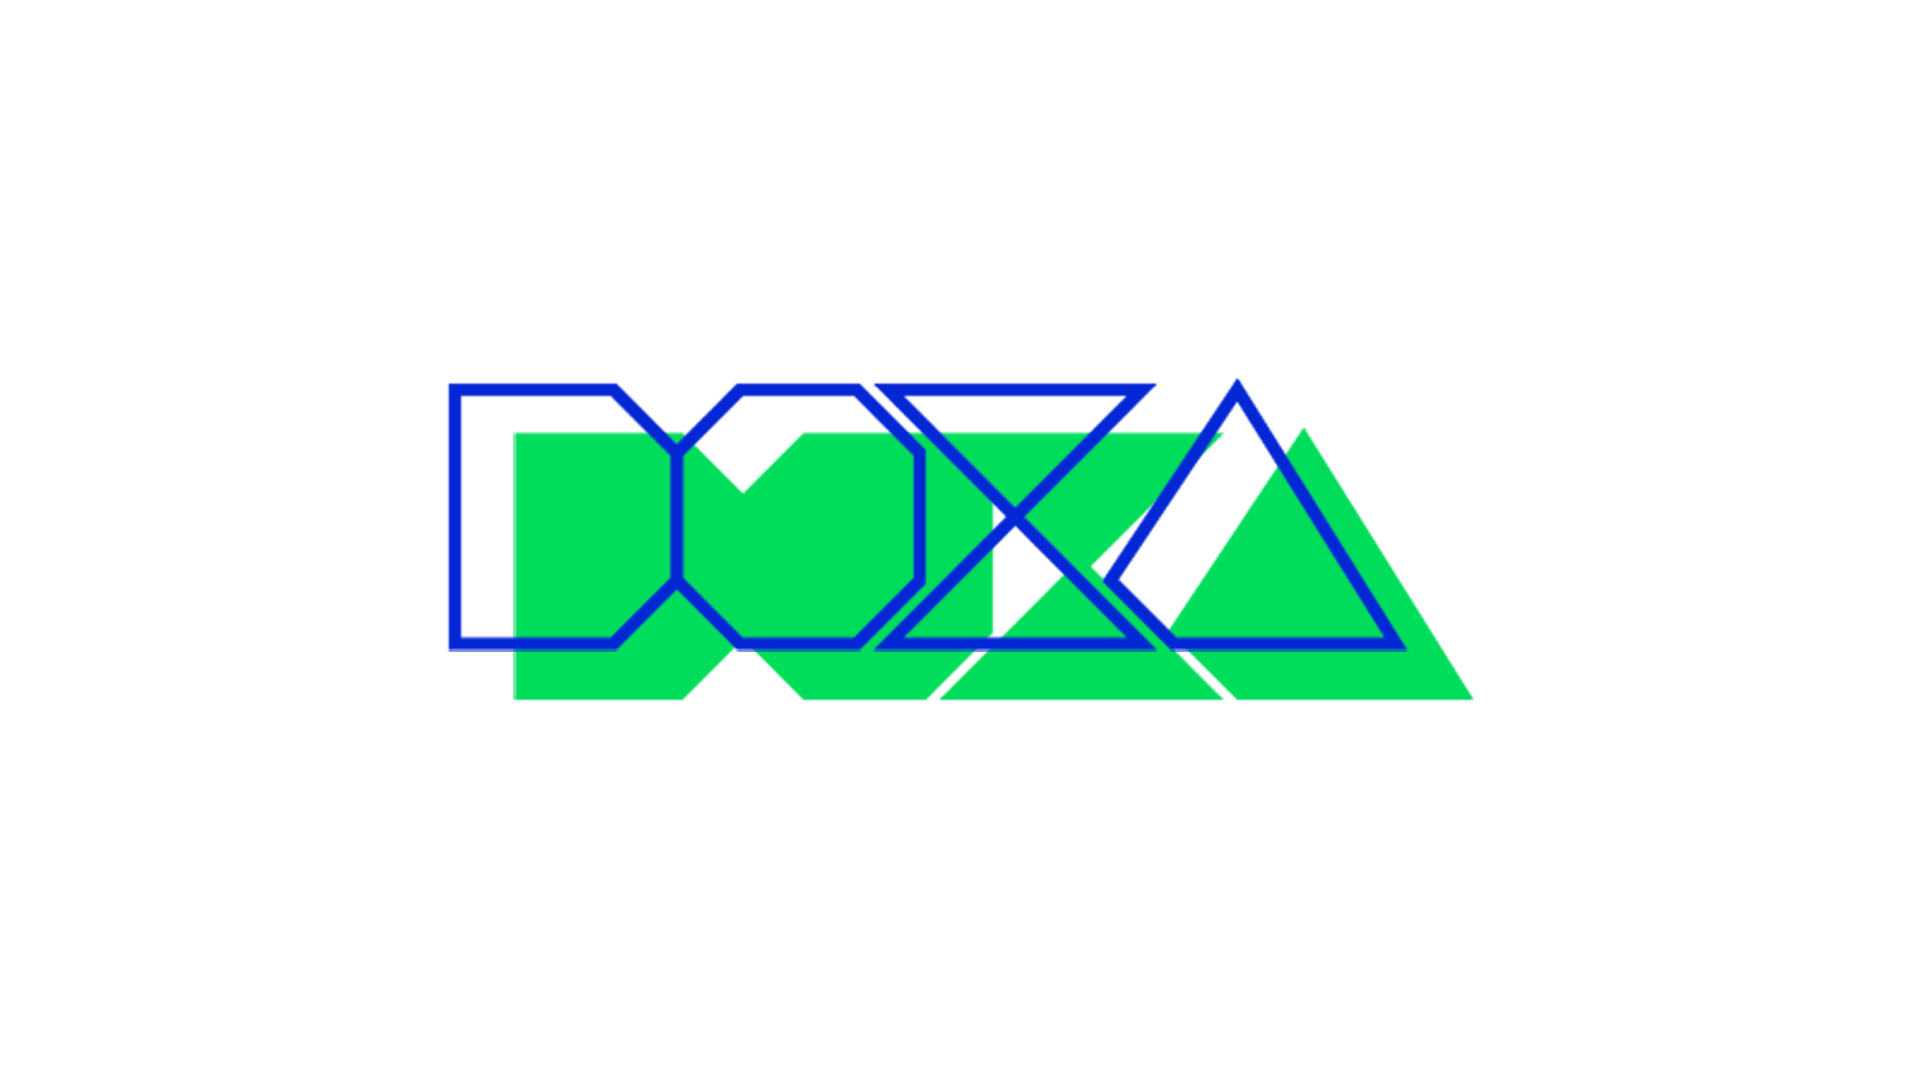 Logo alternativo da conferência doxa